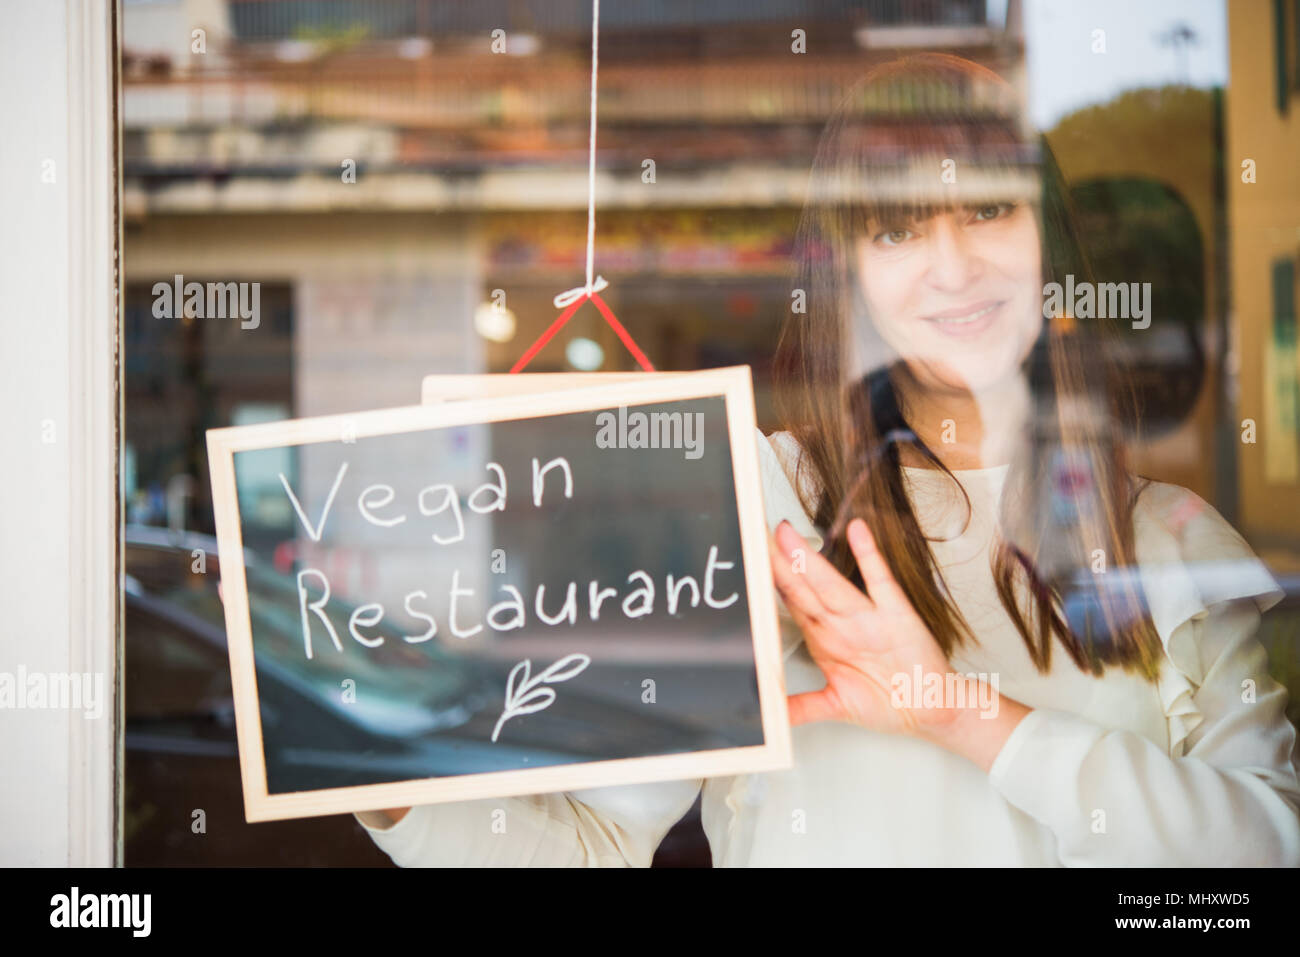 Vegan restaurant owner at work Stock Photo